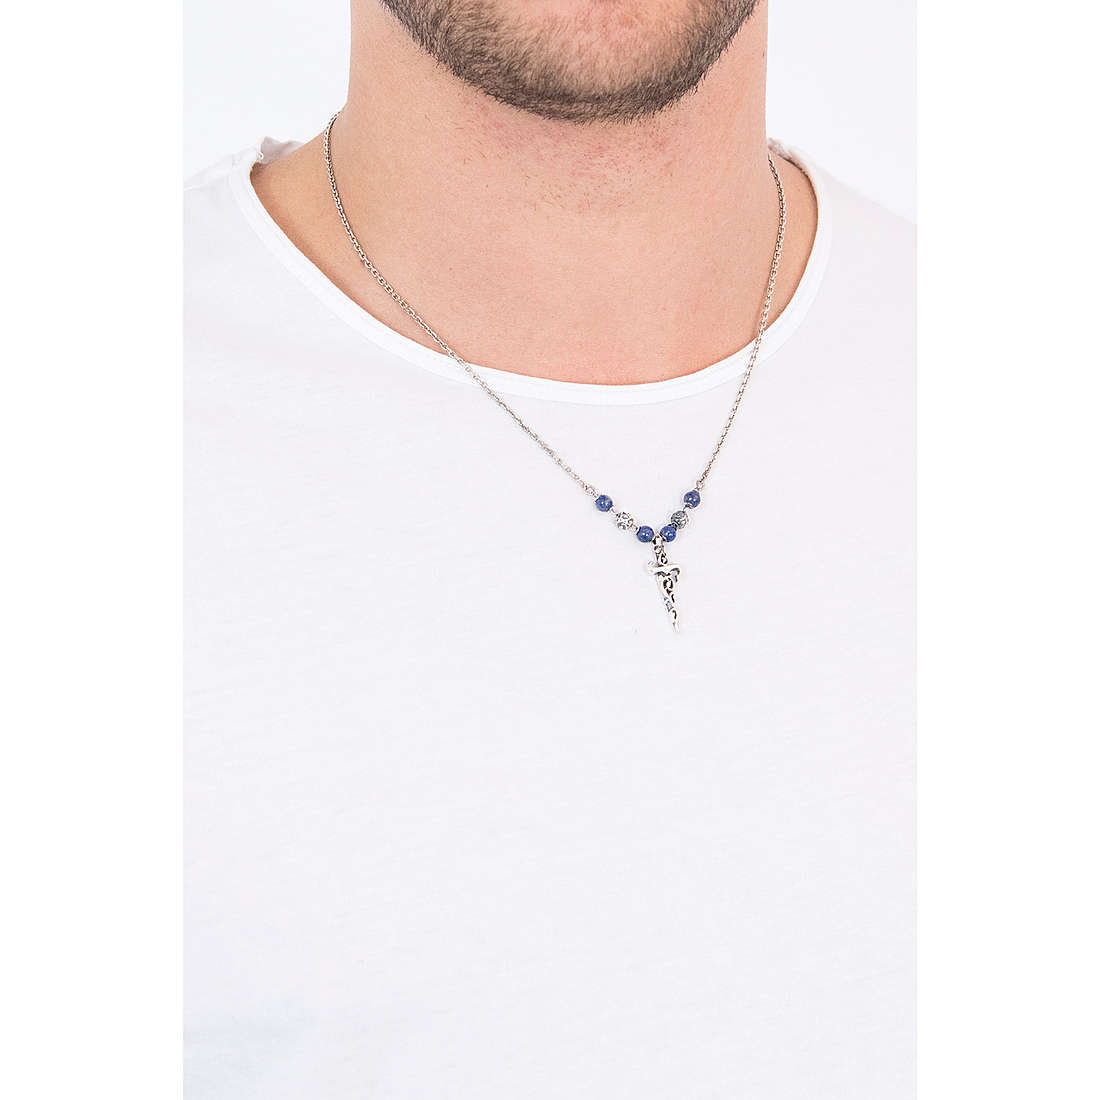 Cesare Paciotti necklaces Gres man JPCL1620V photo wearing